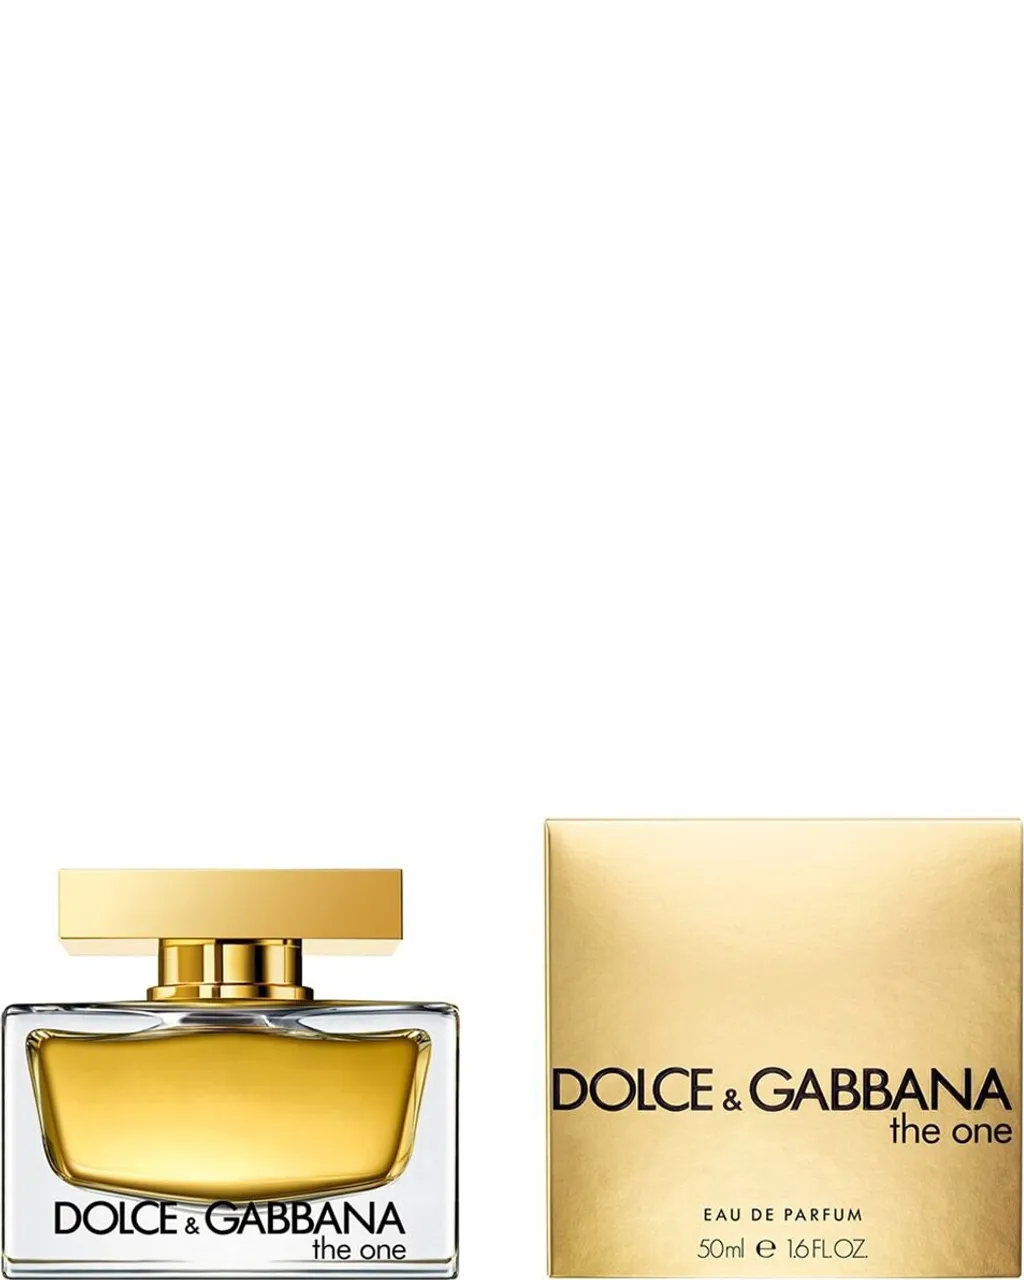 Dolce & Gabbana The One EAU DE PARFUM 50 ML